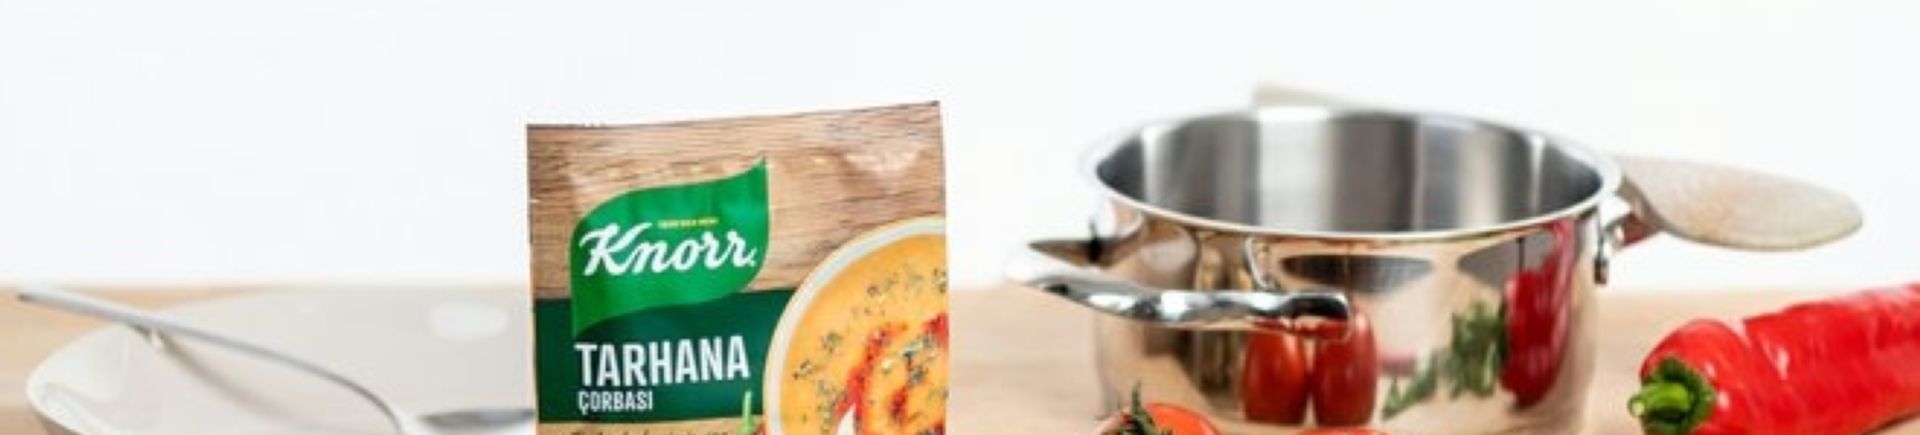 Knorr dry soup powder